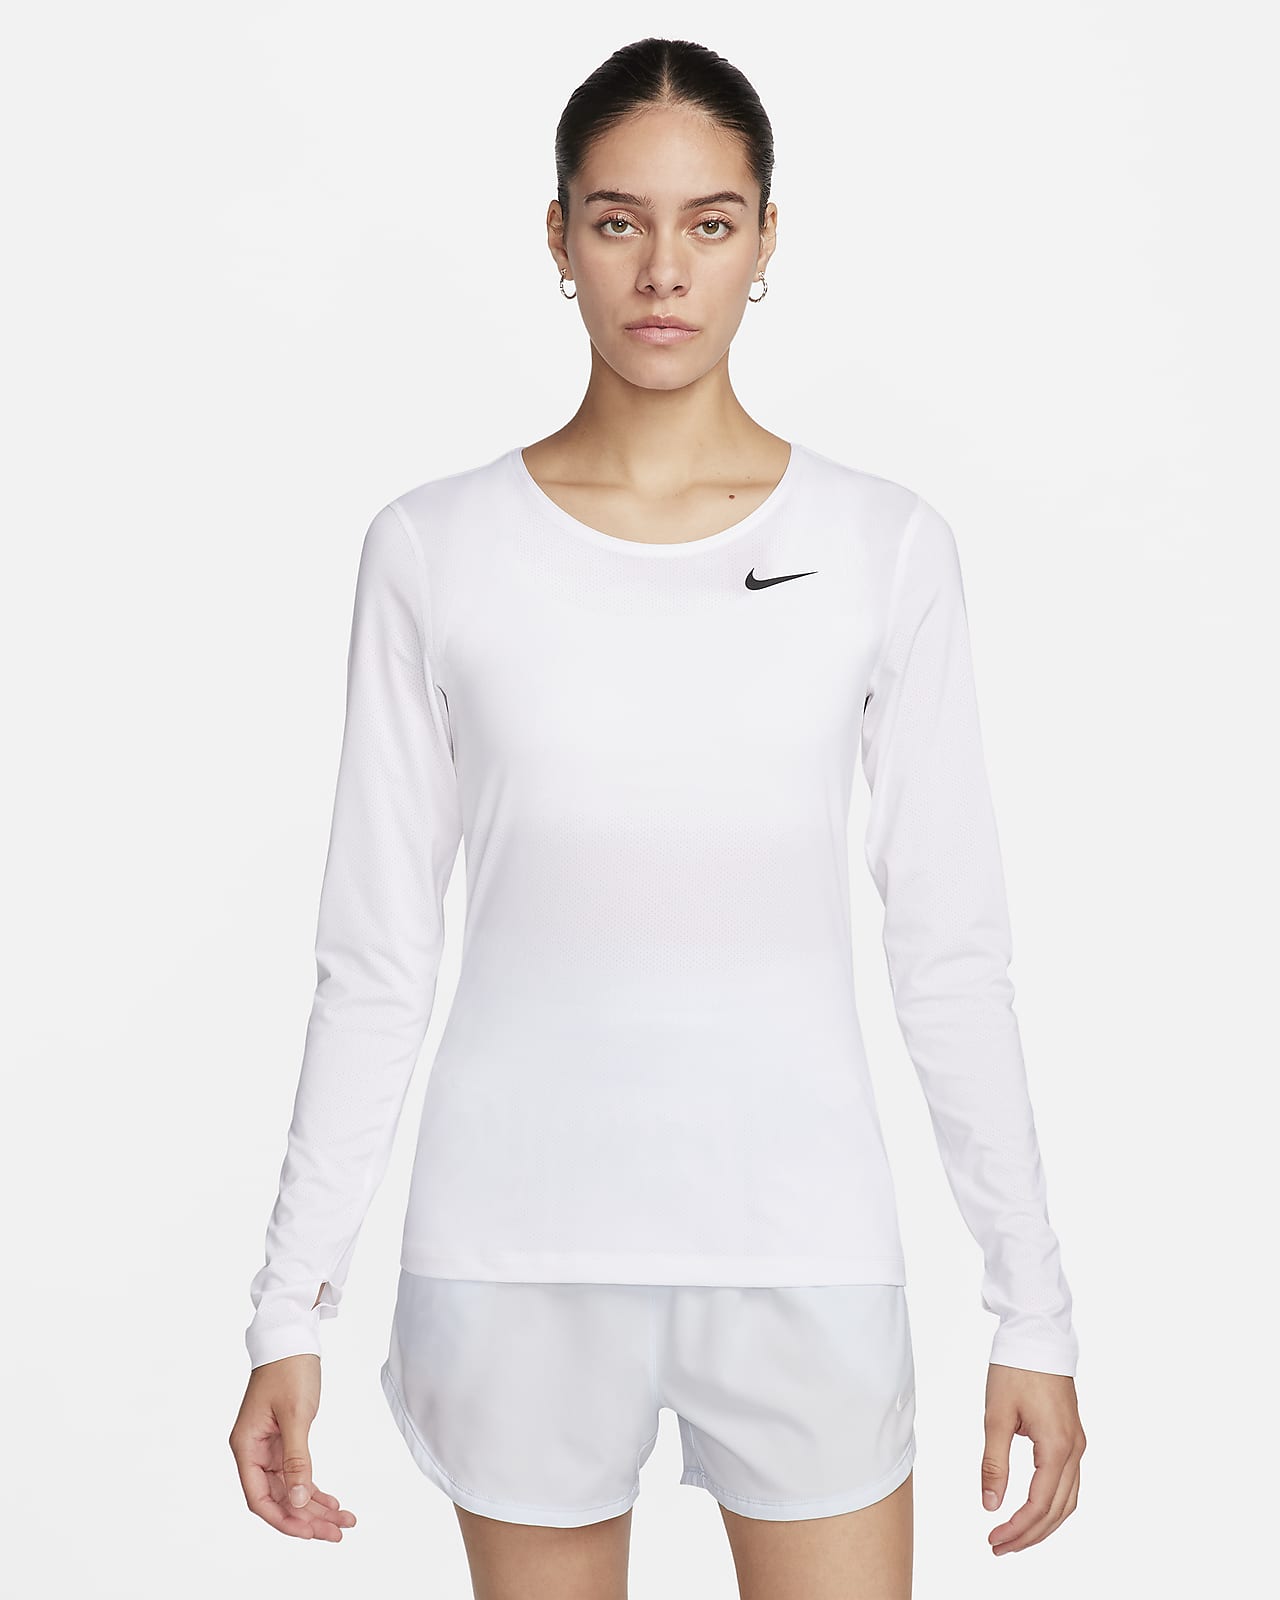 Prenda para la parte superior de manga larga para mujer Nike Pro